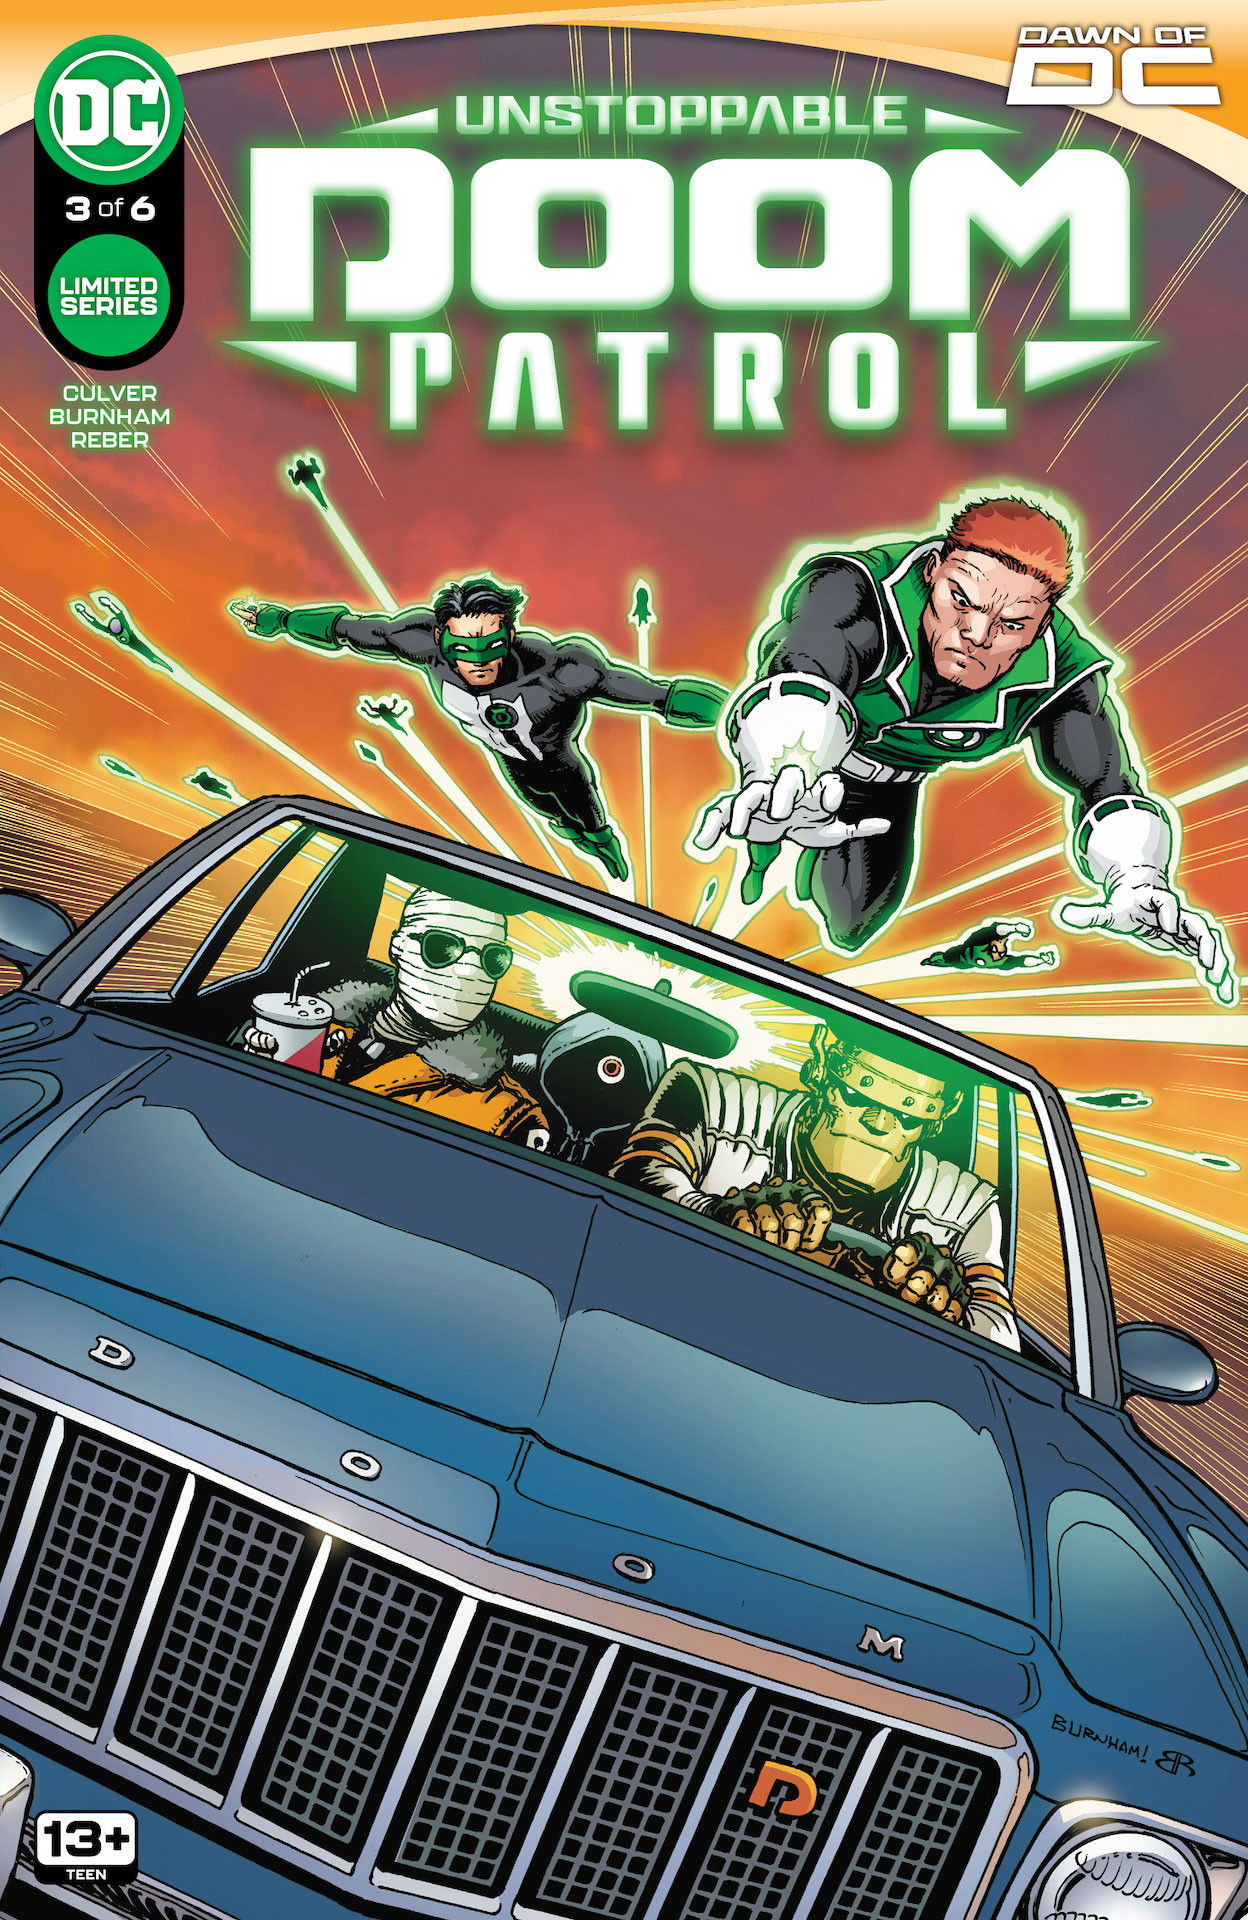 DC Preview: Unstoppable Doom Patrol #3